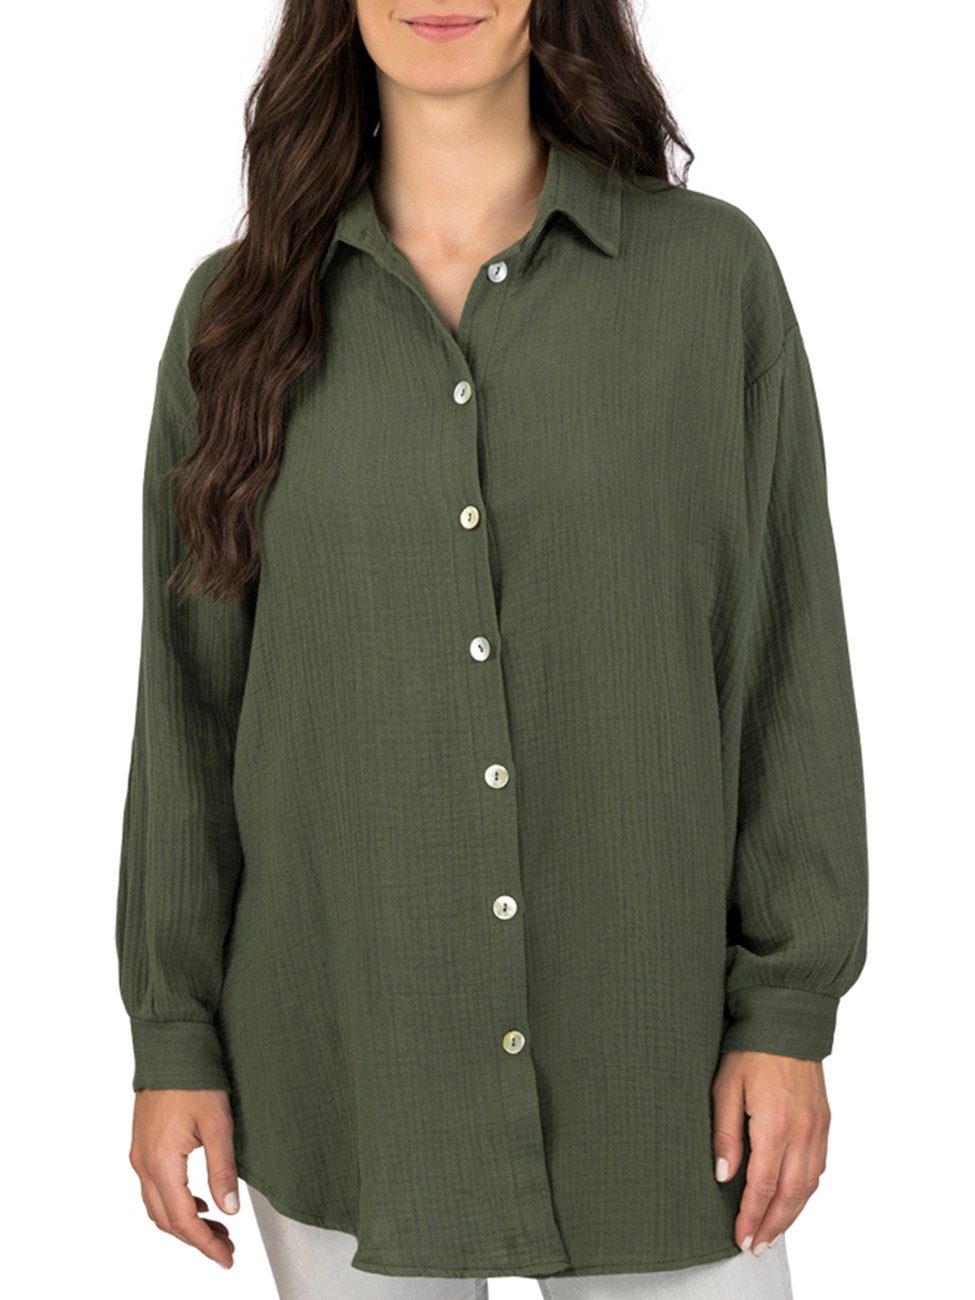 DENIMFY Hemdbluse Damen Bluse DFMathilda Oversize Fit Basic Musselin Hemd aus 100% Baumwolle Olive (52316)